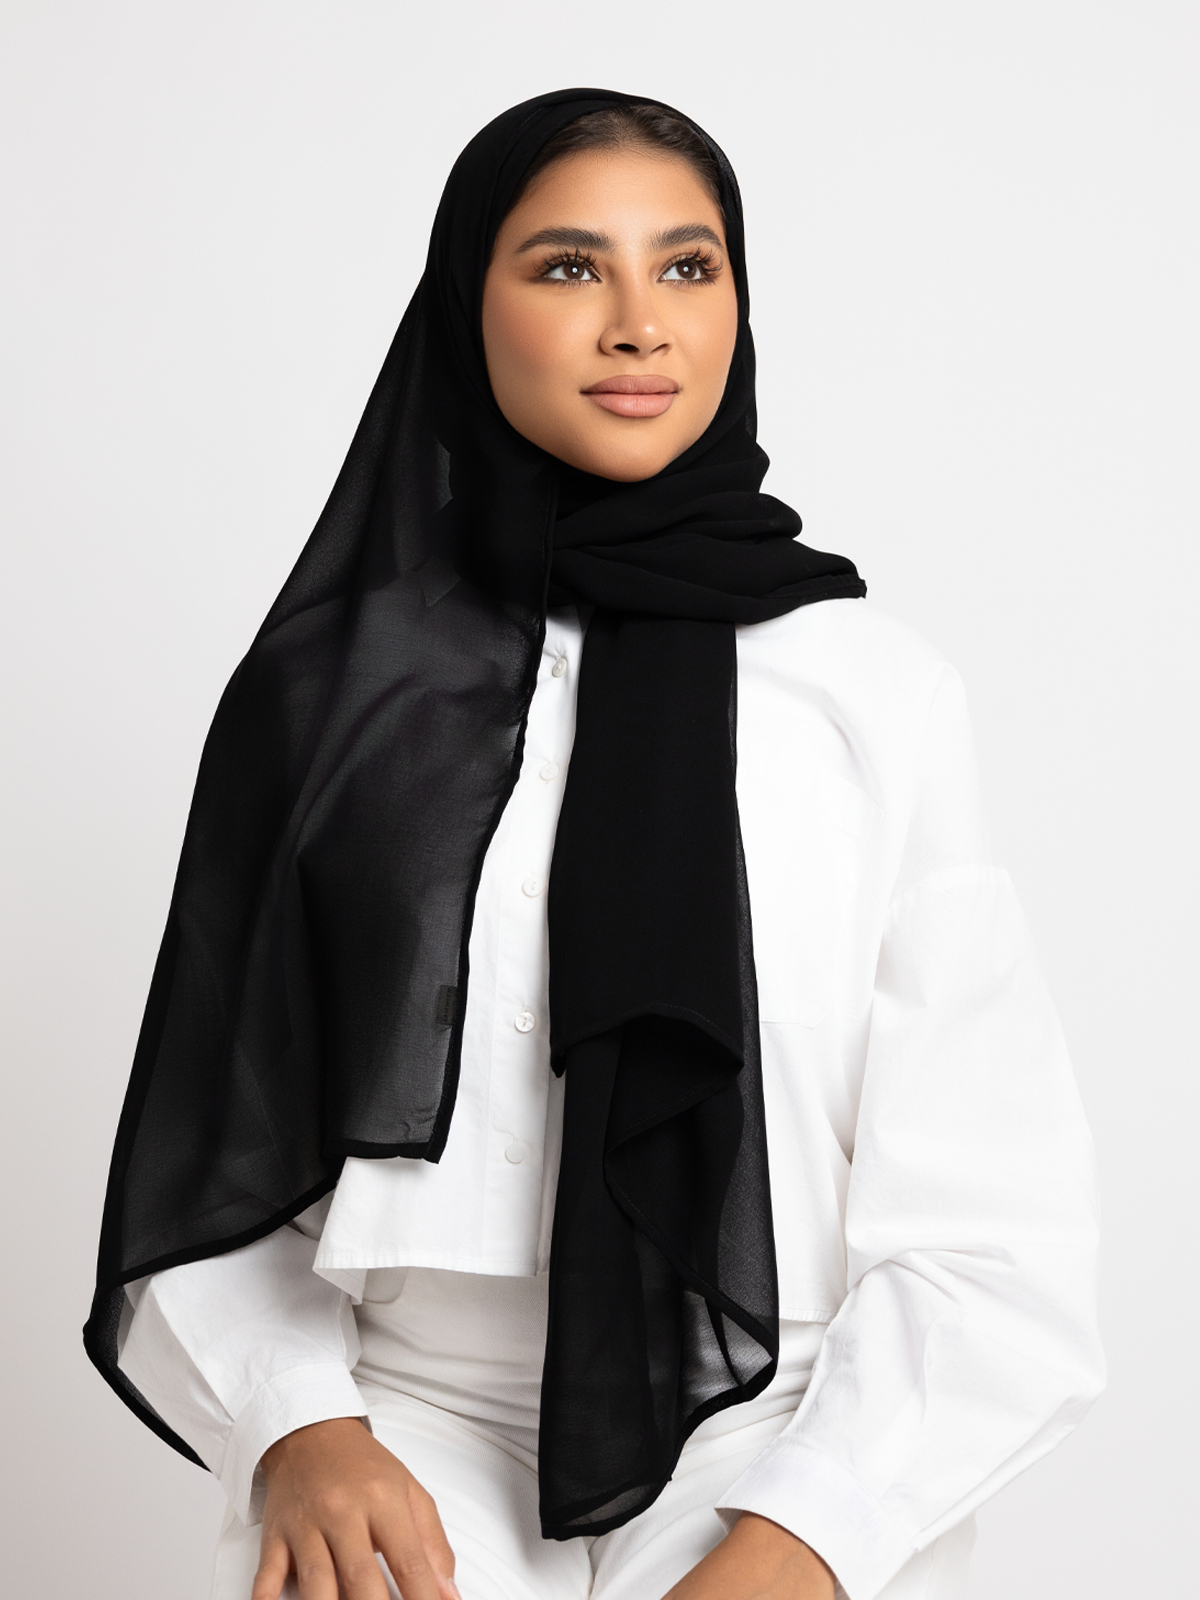 Luxurious chiffon light and soft hijab plain tarha 200 cm long black color high quality material online in ksa by kaafmeem